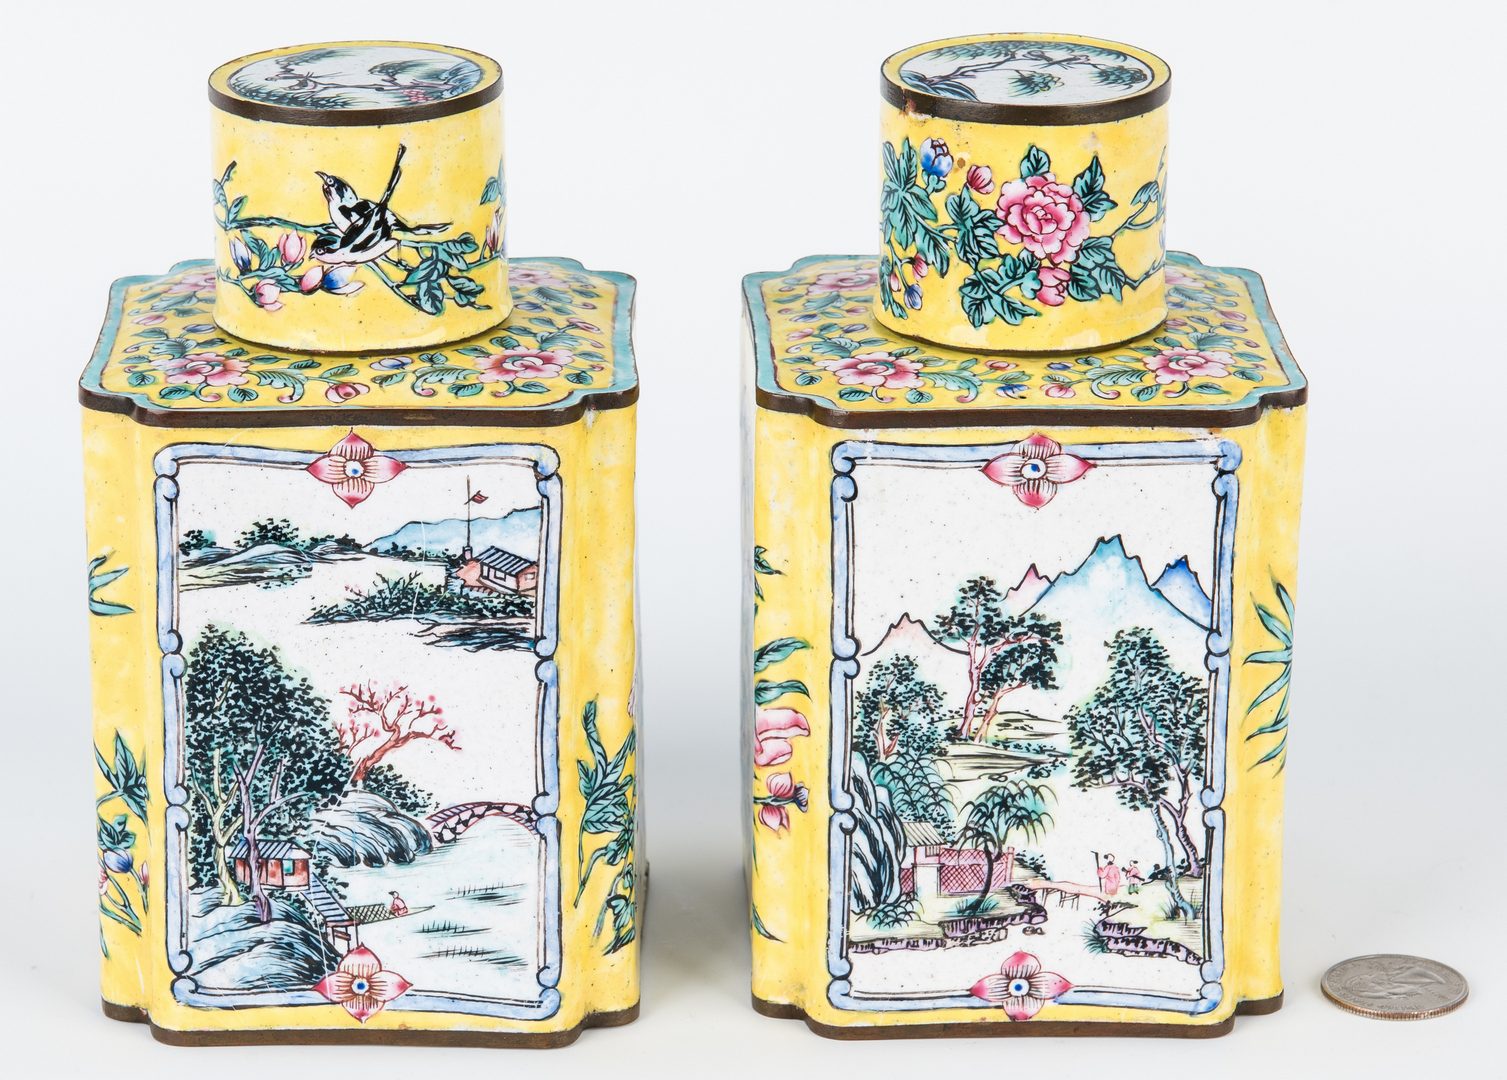 Lot 1: Pair of Chinese Enamel Tea Caddies